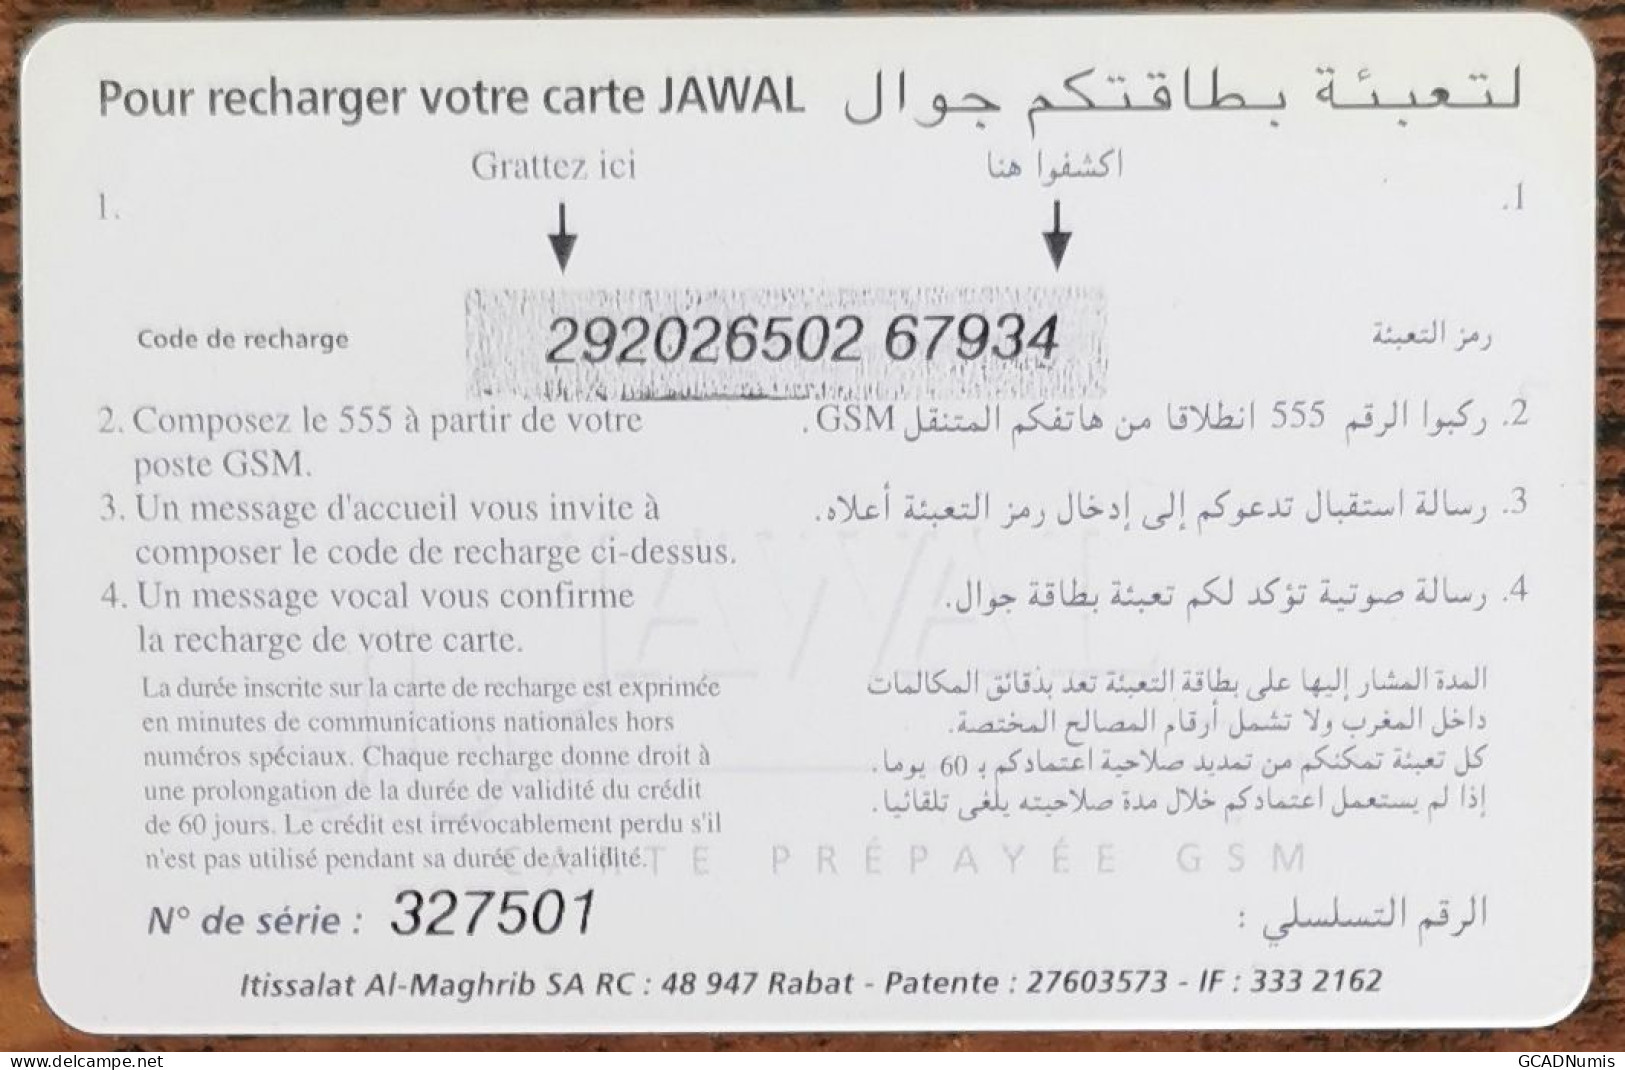 Carte De Recharge - Jawal 30mn Mobile Refill Maroc Telecom - Télécarte ~45 - Marocco